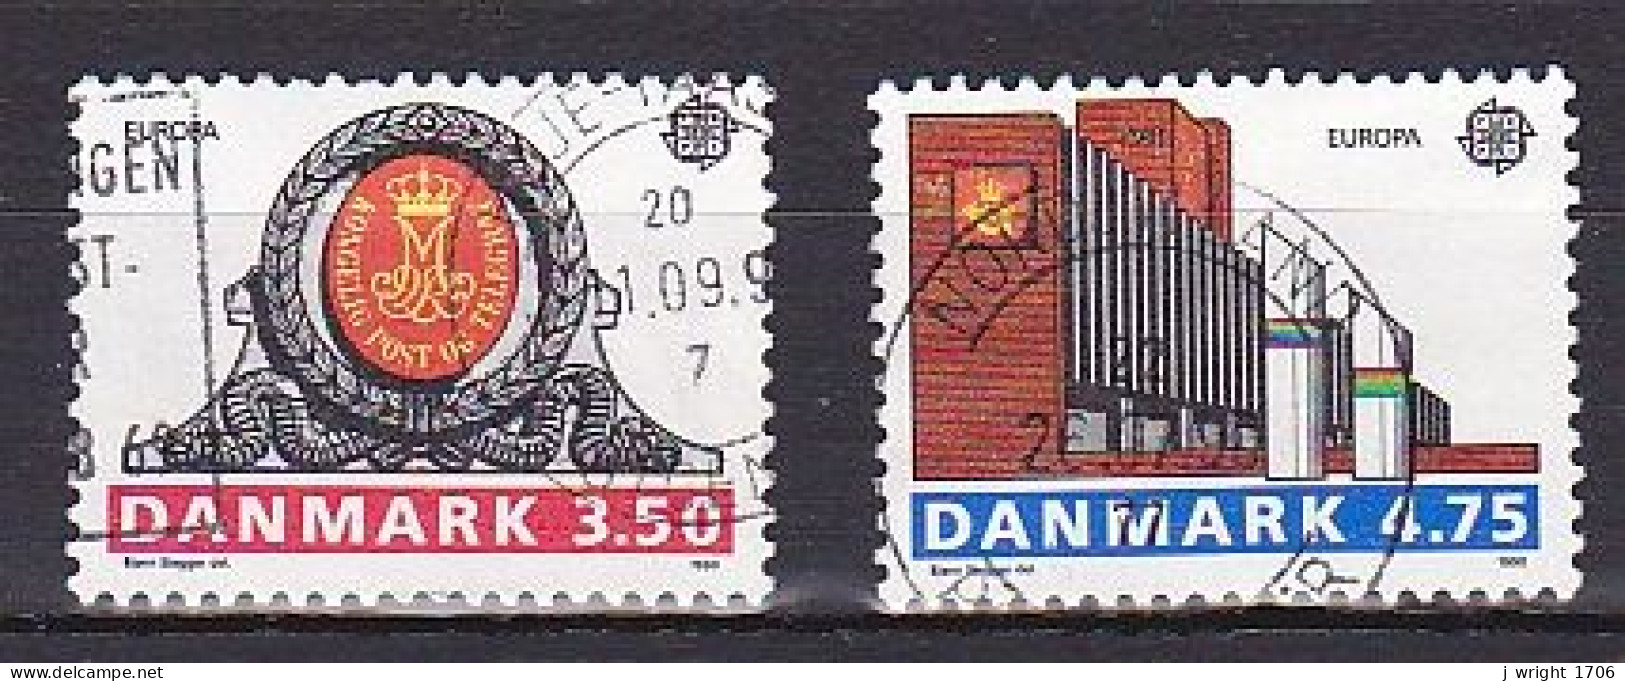 Denmark, 1990, Europa CEPT, Set, USED - Usado